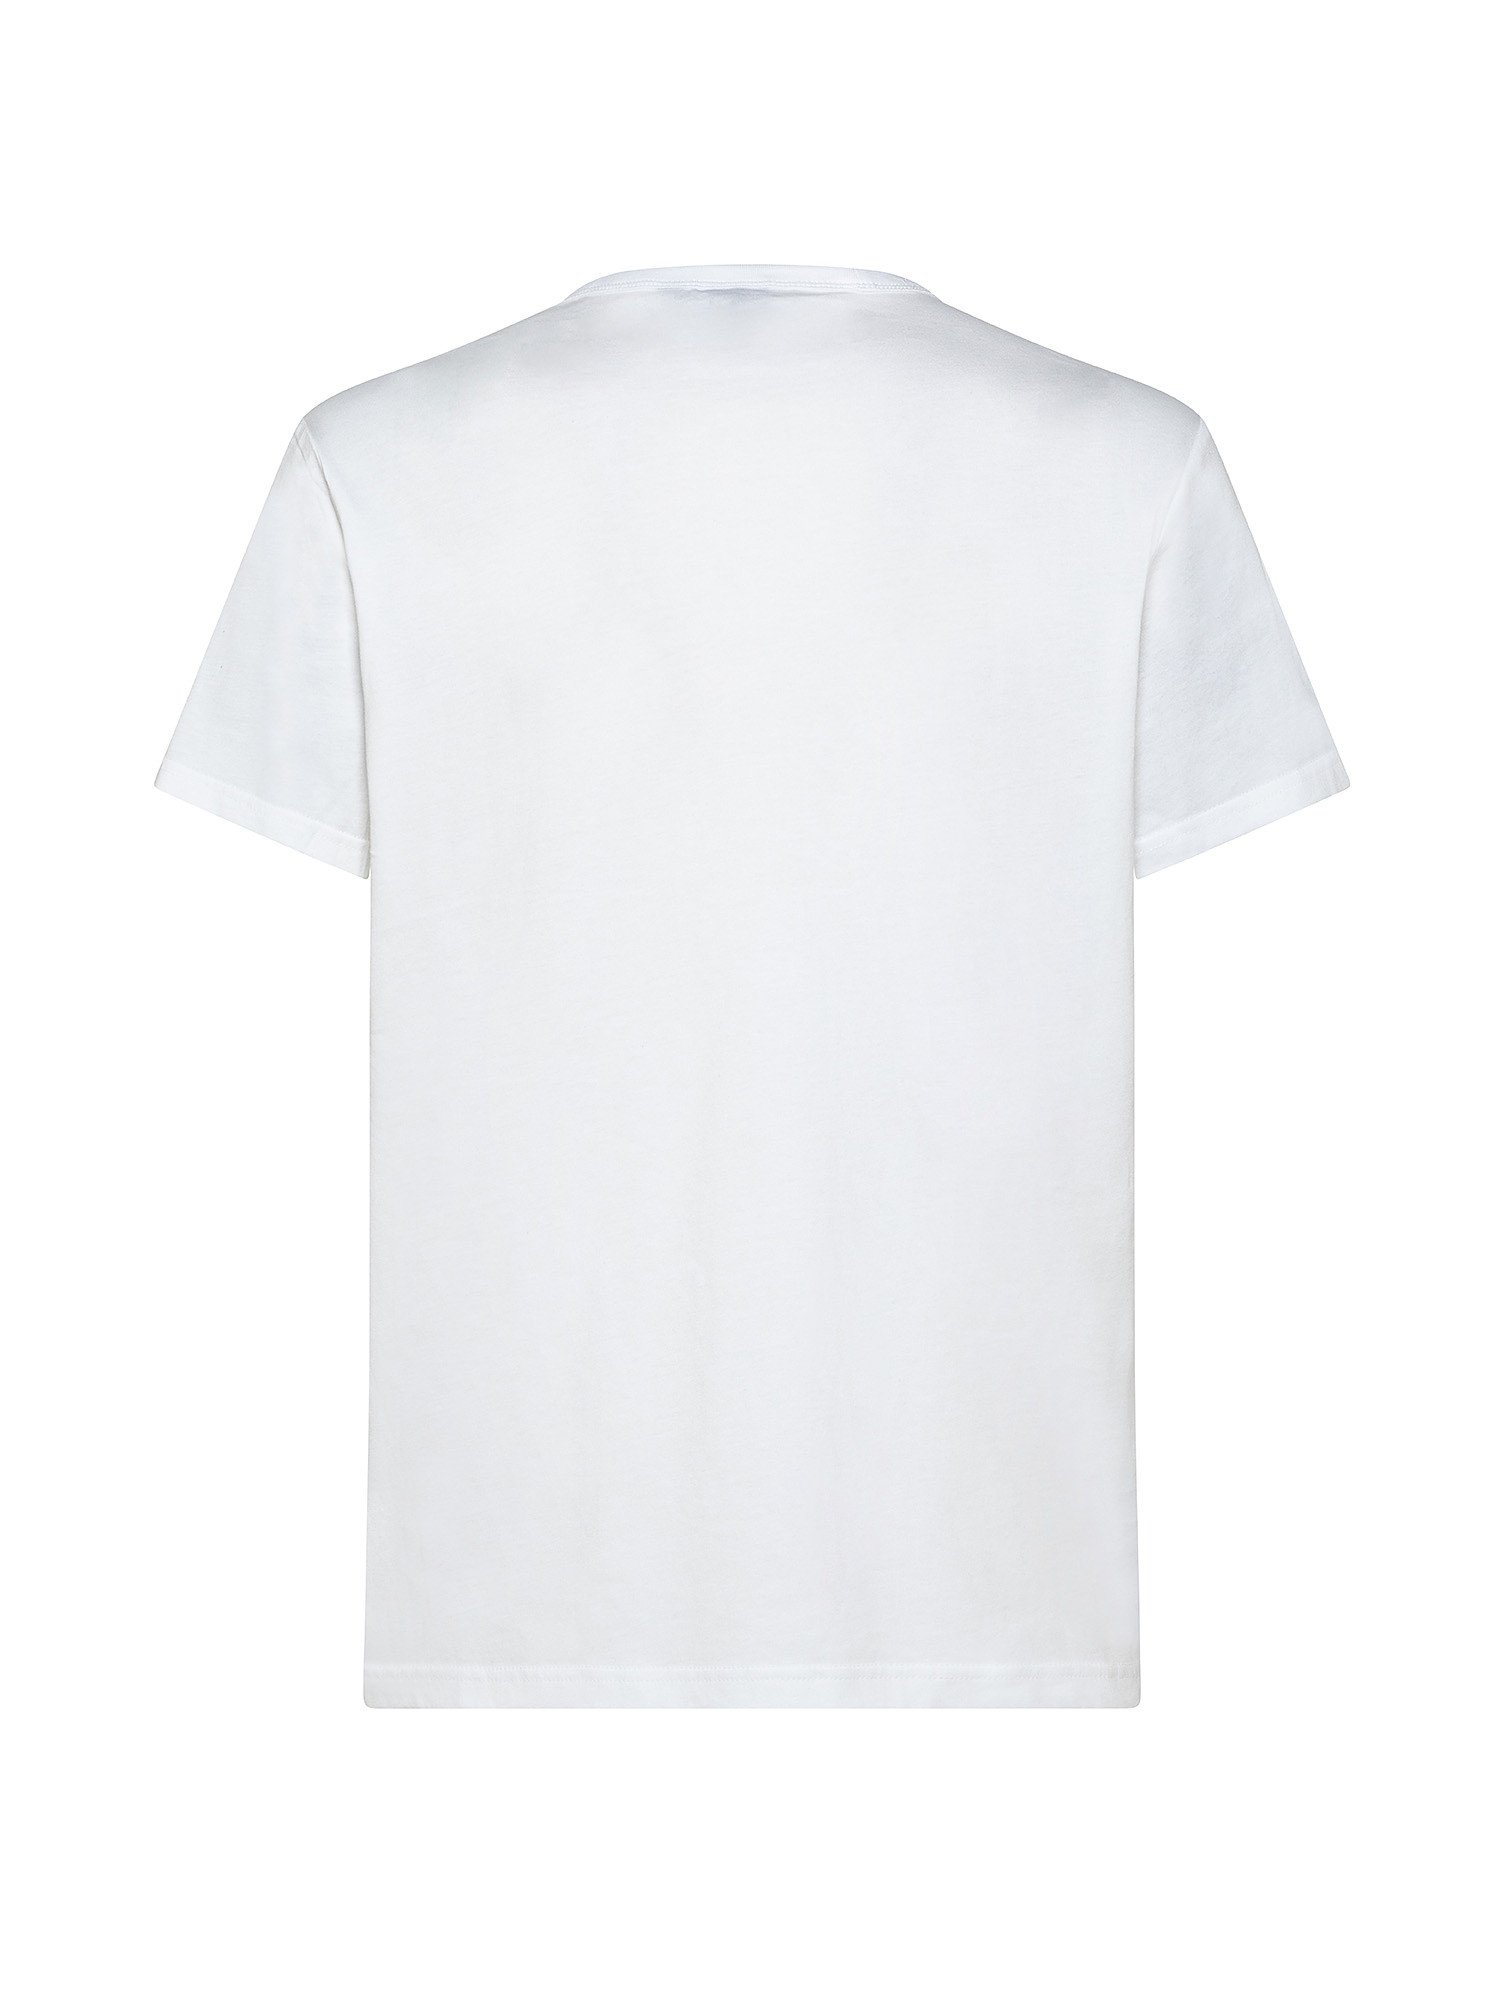 Holorn t-shirt, Bianco, large image number 1